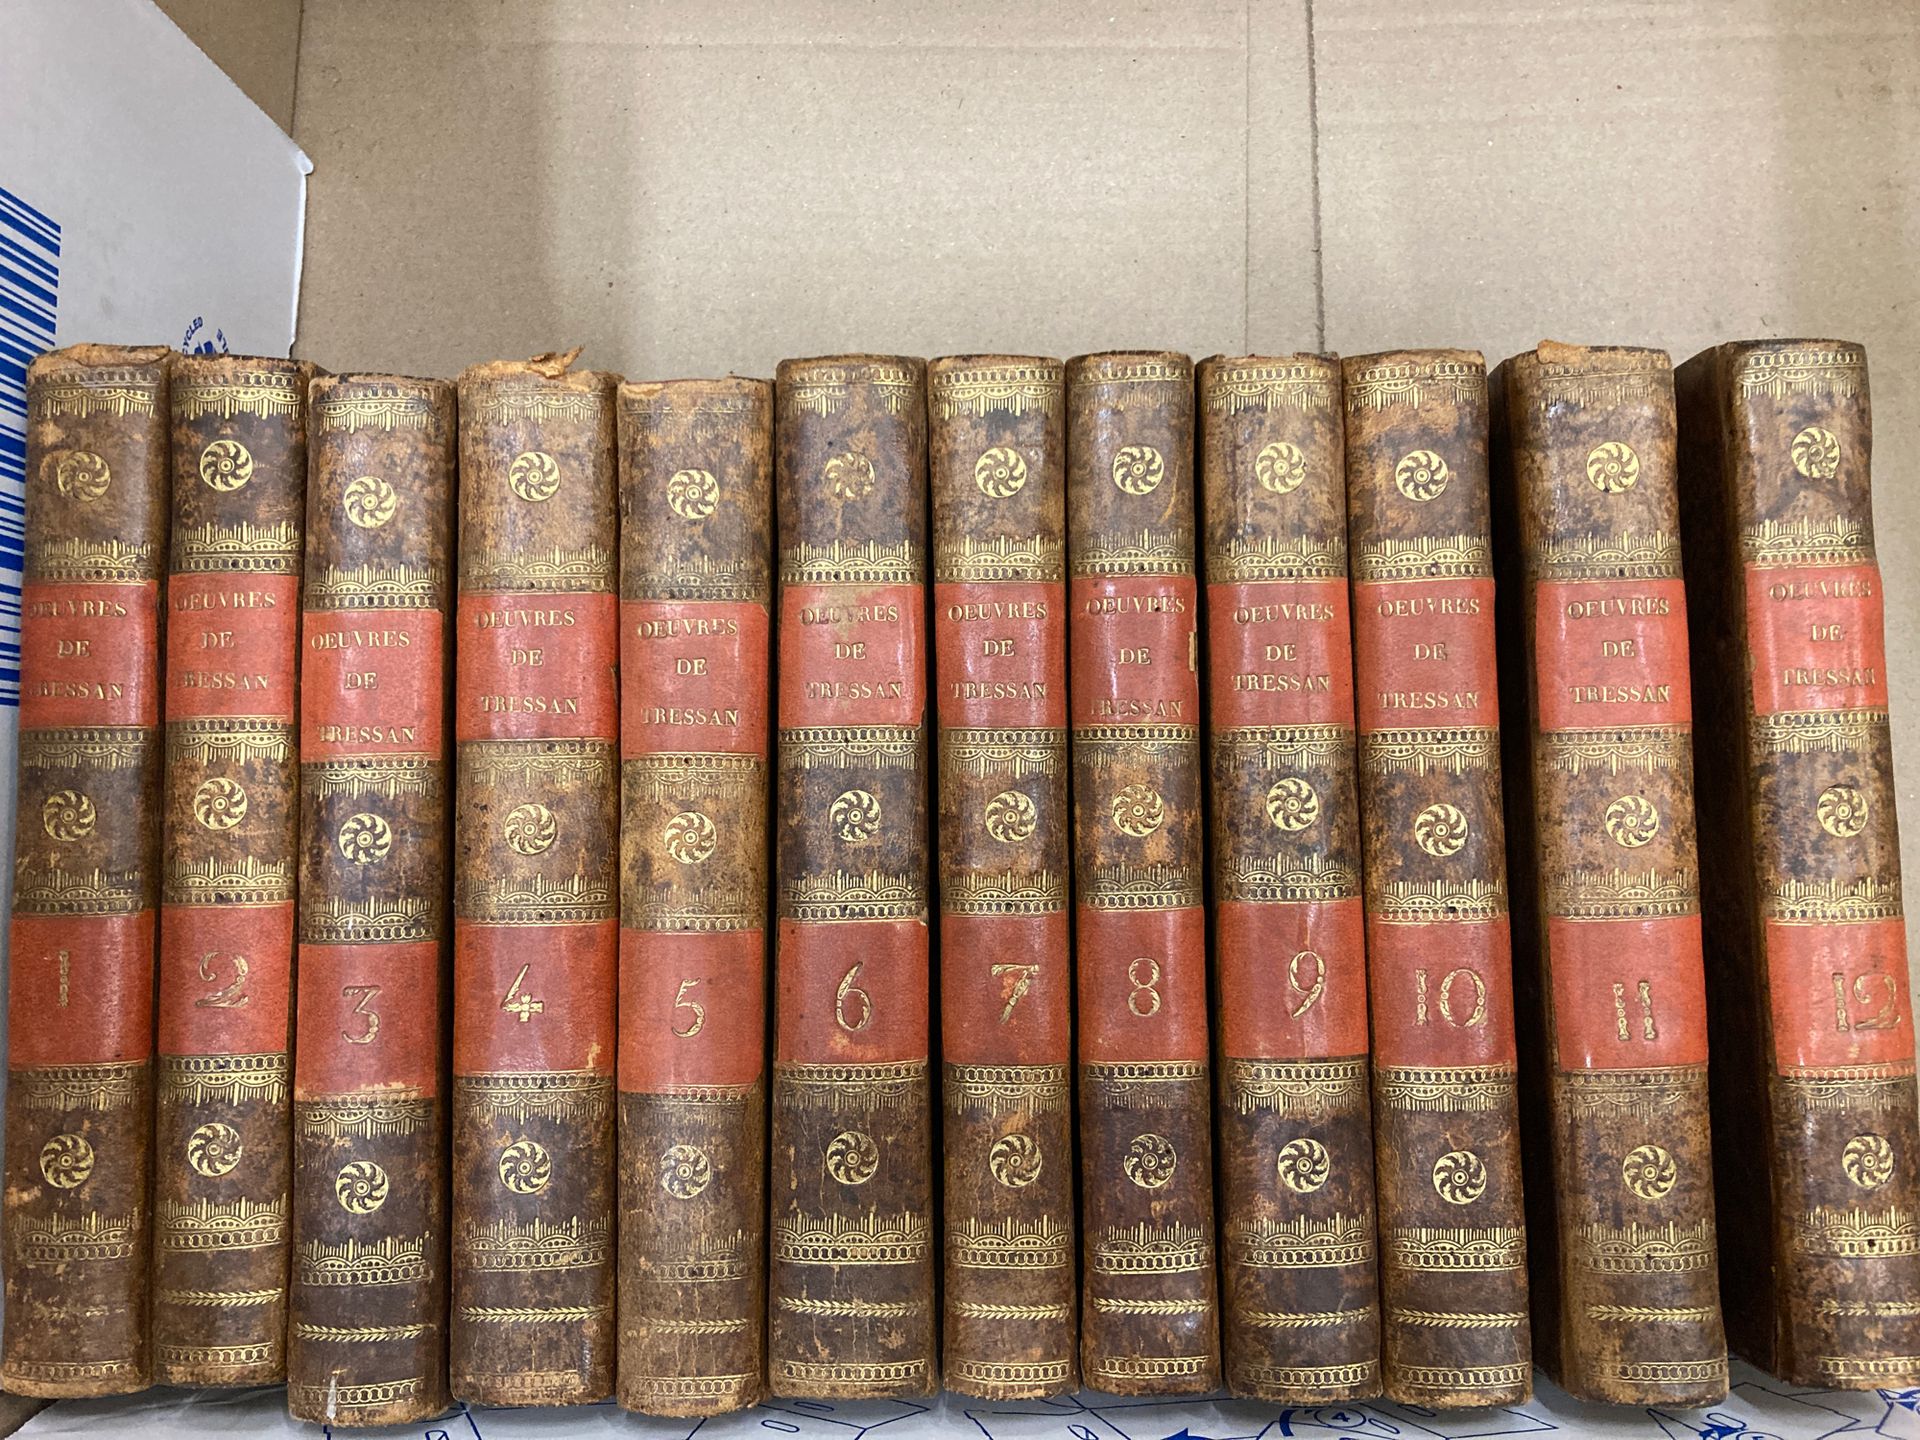 Null 十八世纪｜特雷桑 - 特雷桑伯爵的作品选集

埃夫勒，安塞勒，1796年。

12卷8开本，全小牛皮，书脊有装饰。

全页数字。